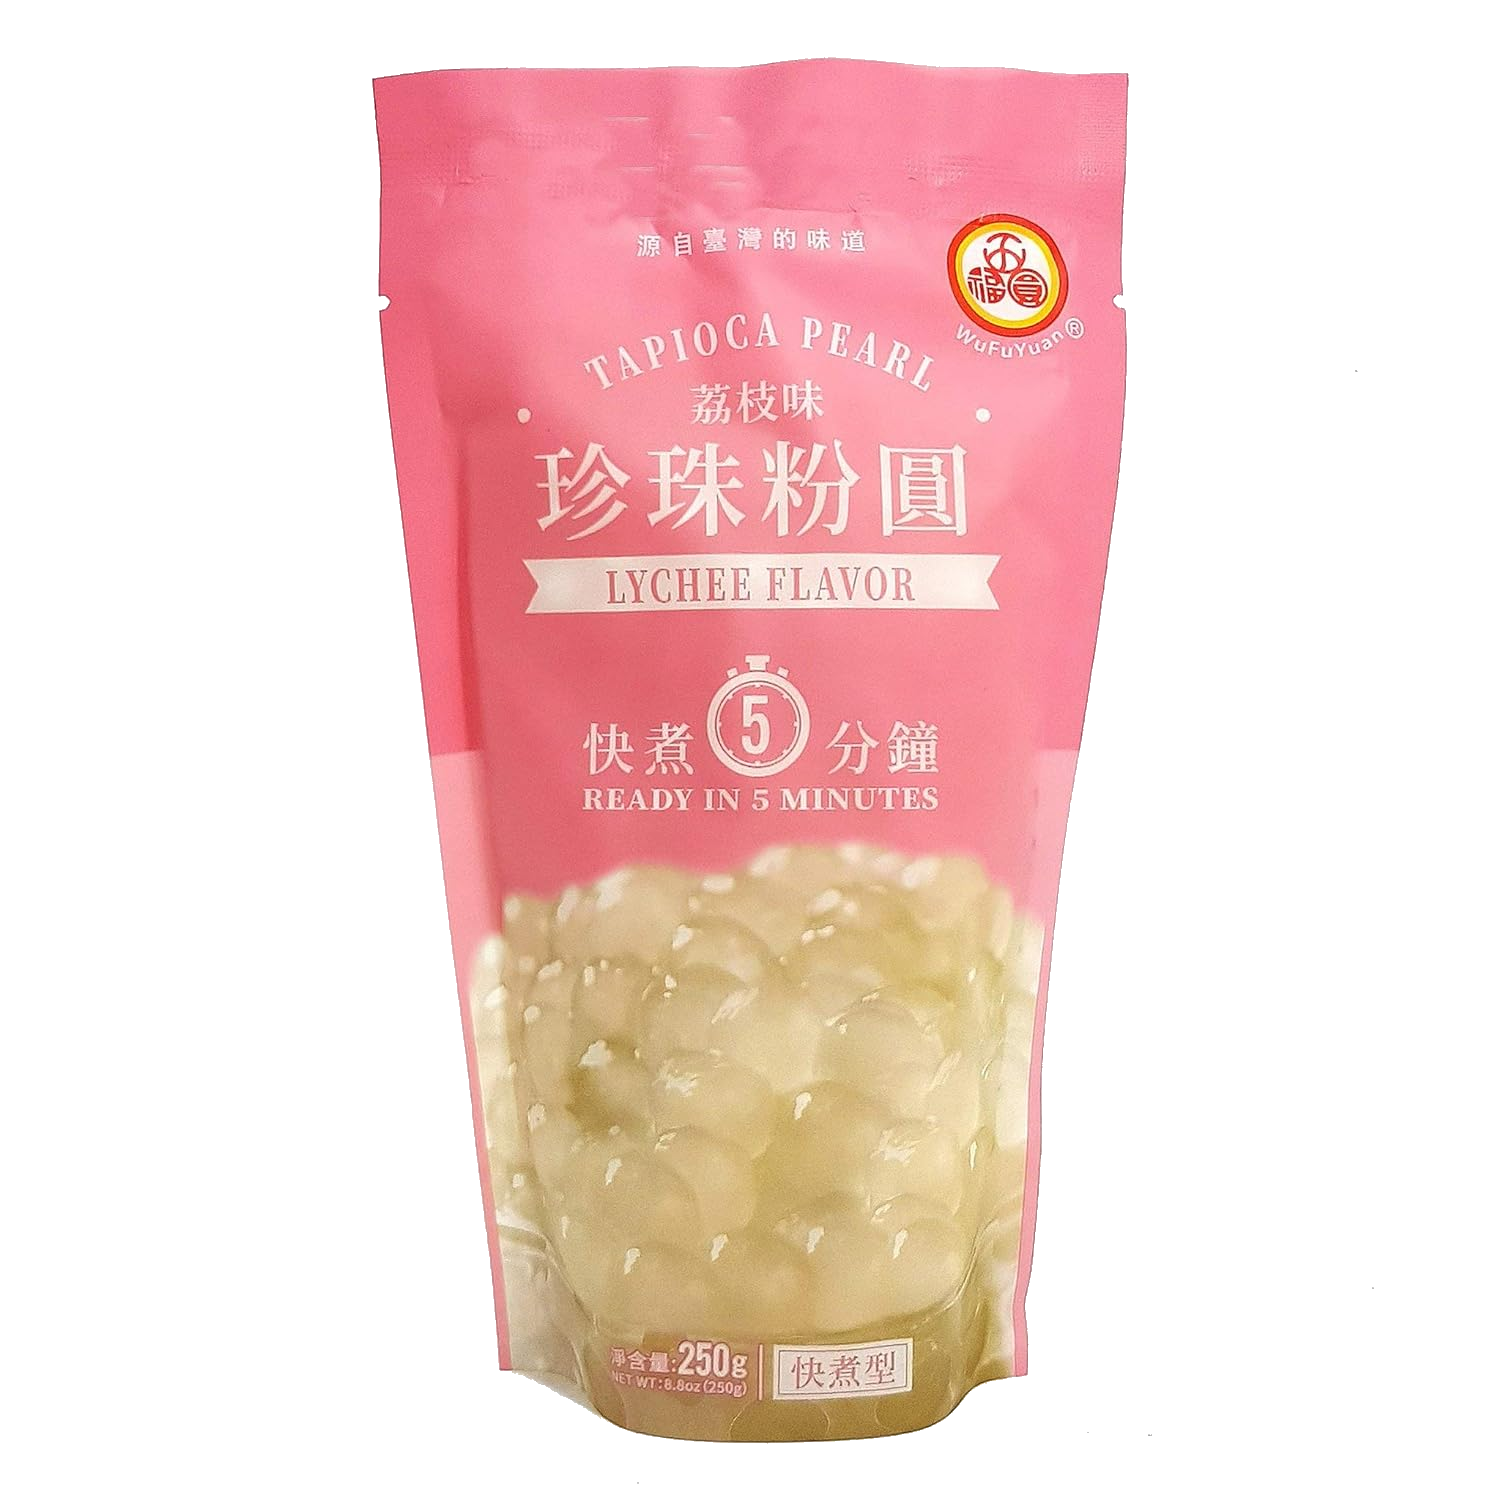 Wufuyuan Tapioca Pearl Lychee Flavour 250g